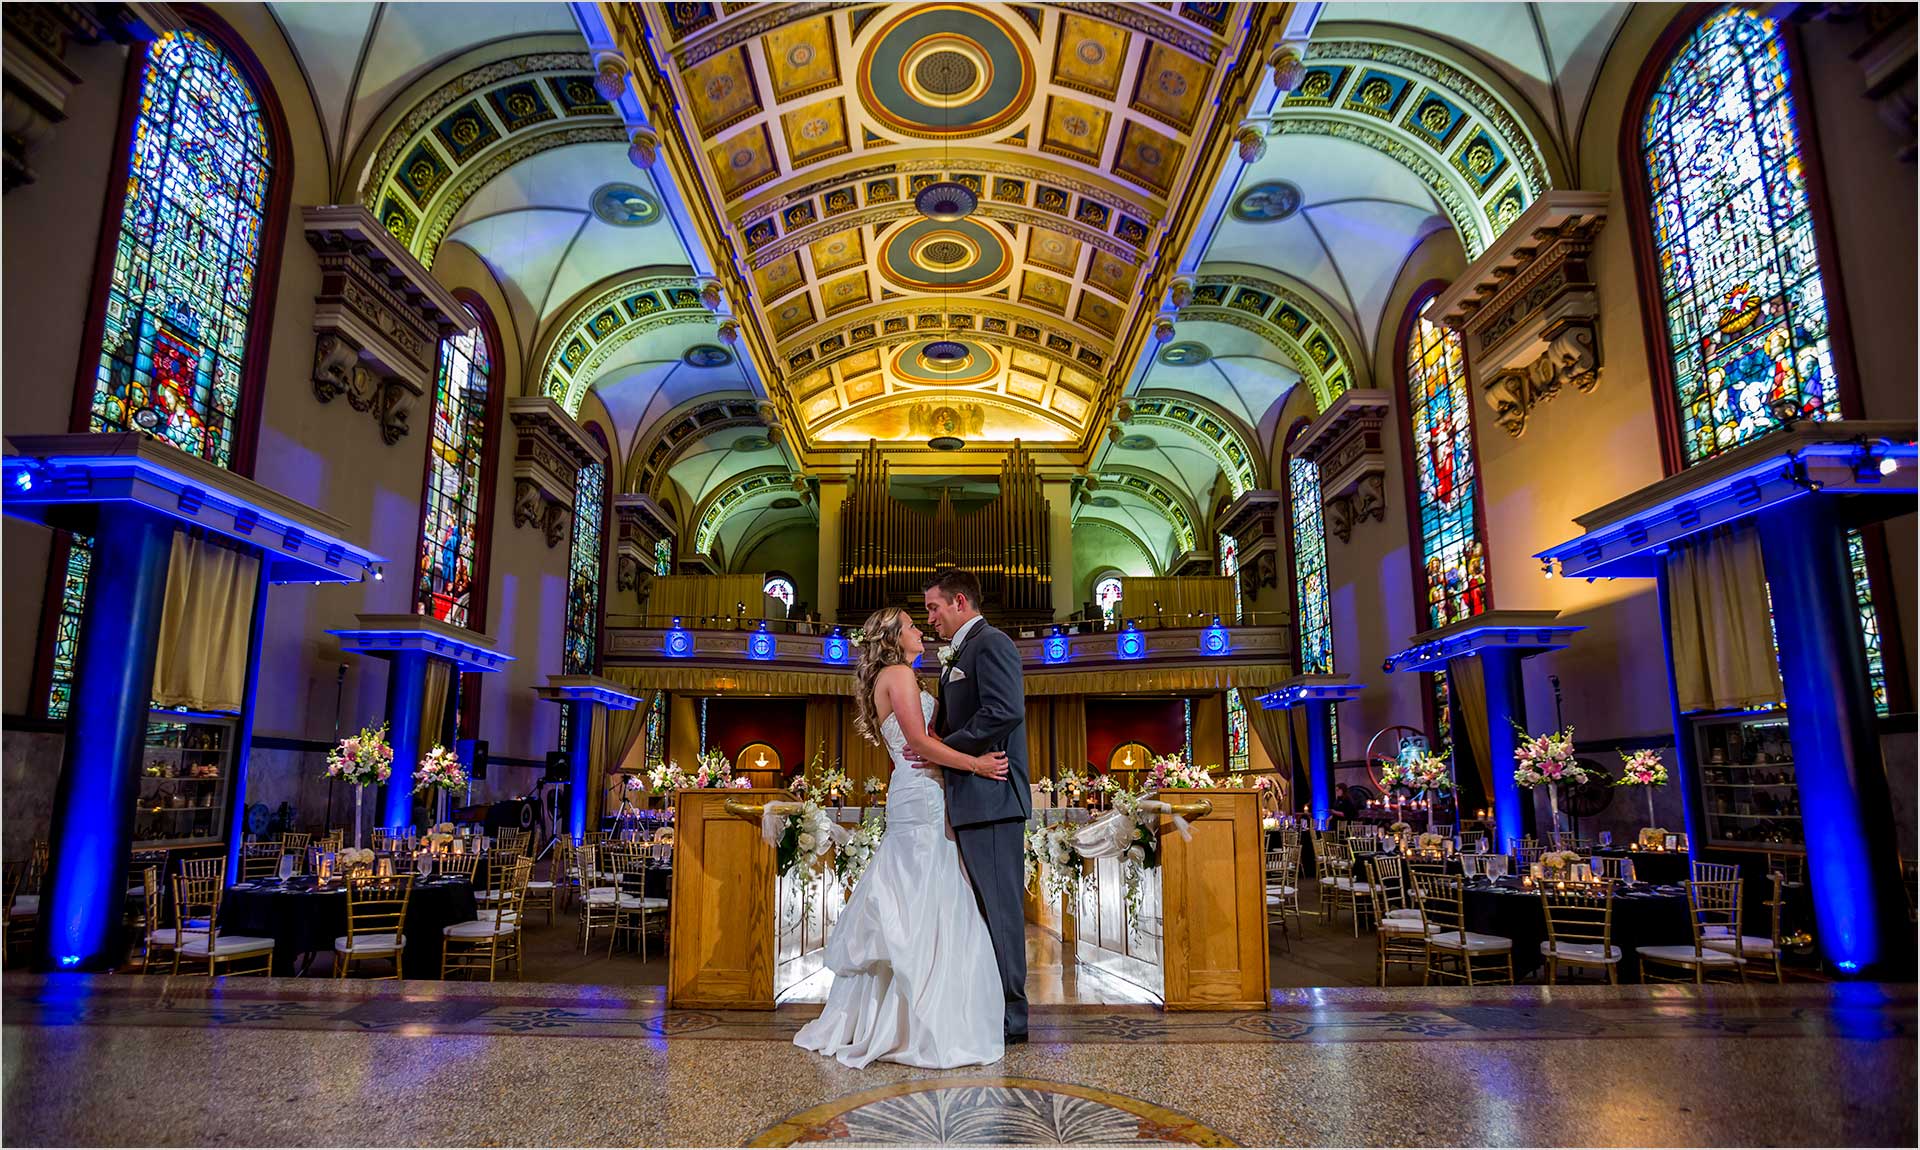 Bell Event Centre Cincinnati Wedding Reception pictures off camera flash